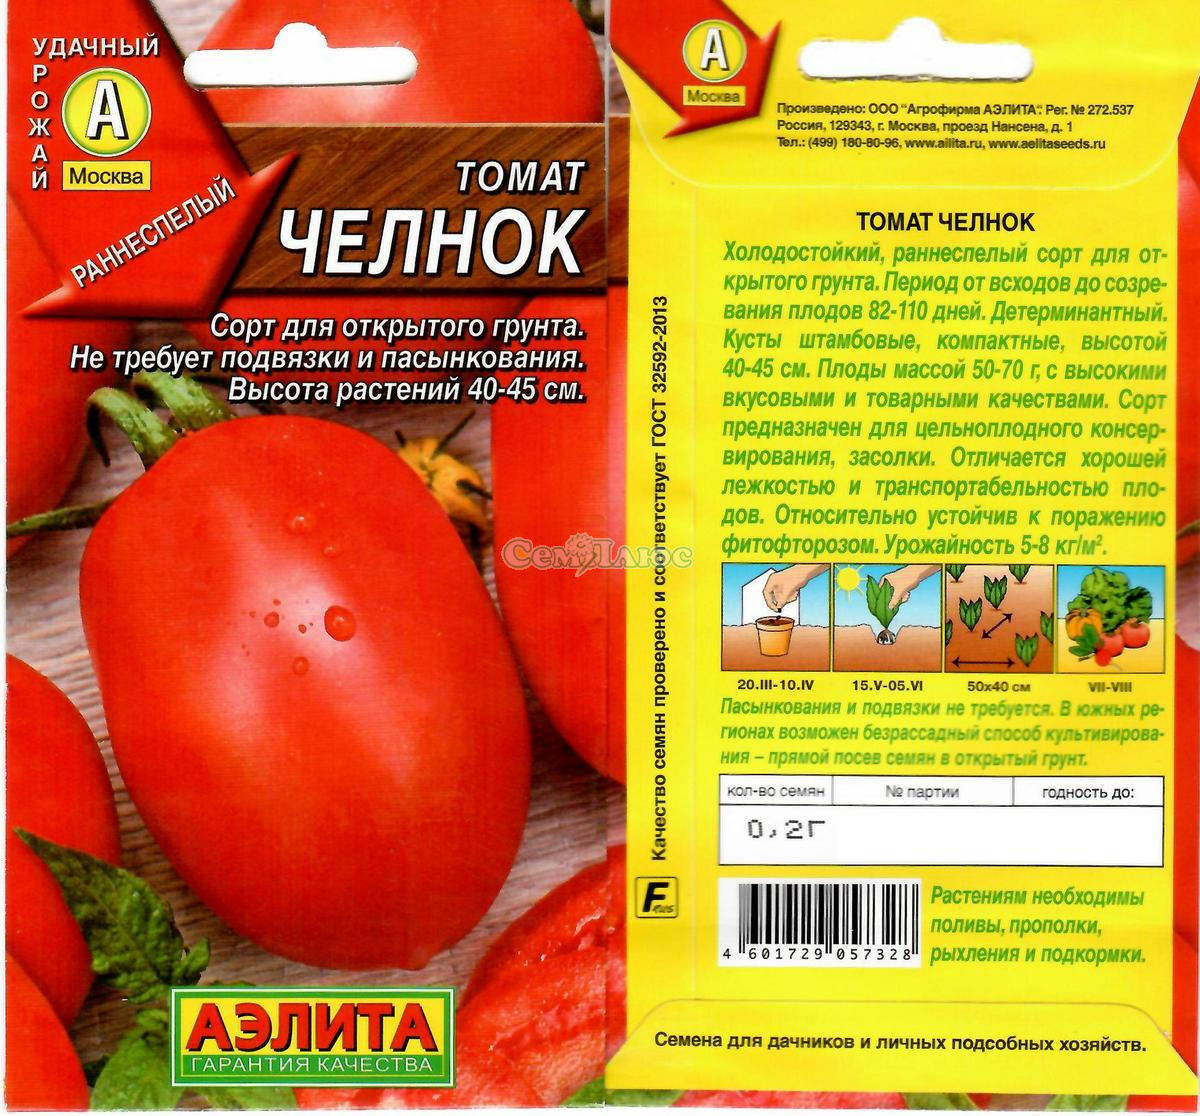 Характеристика и описание сорта помидор «т 34 f1»: достоинства и недостатки